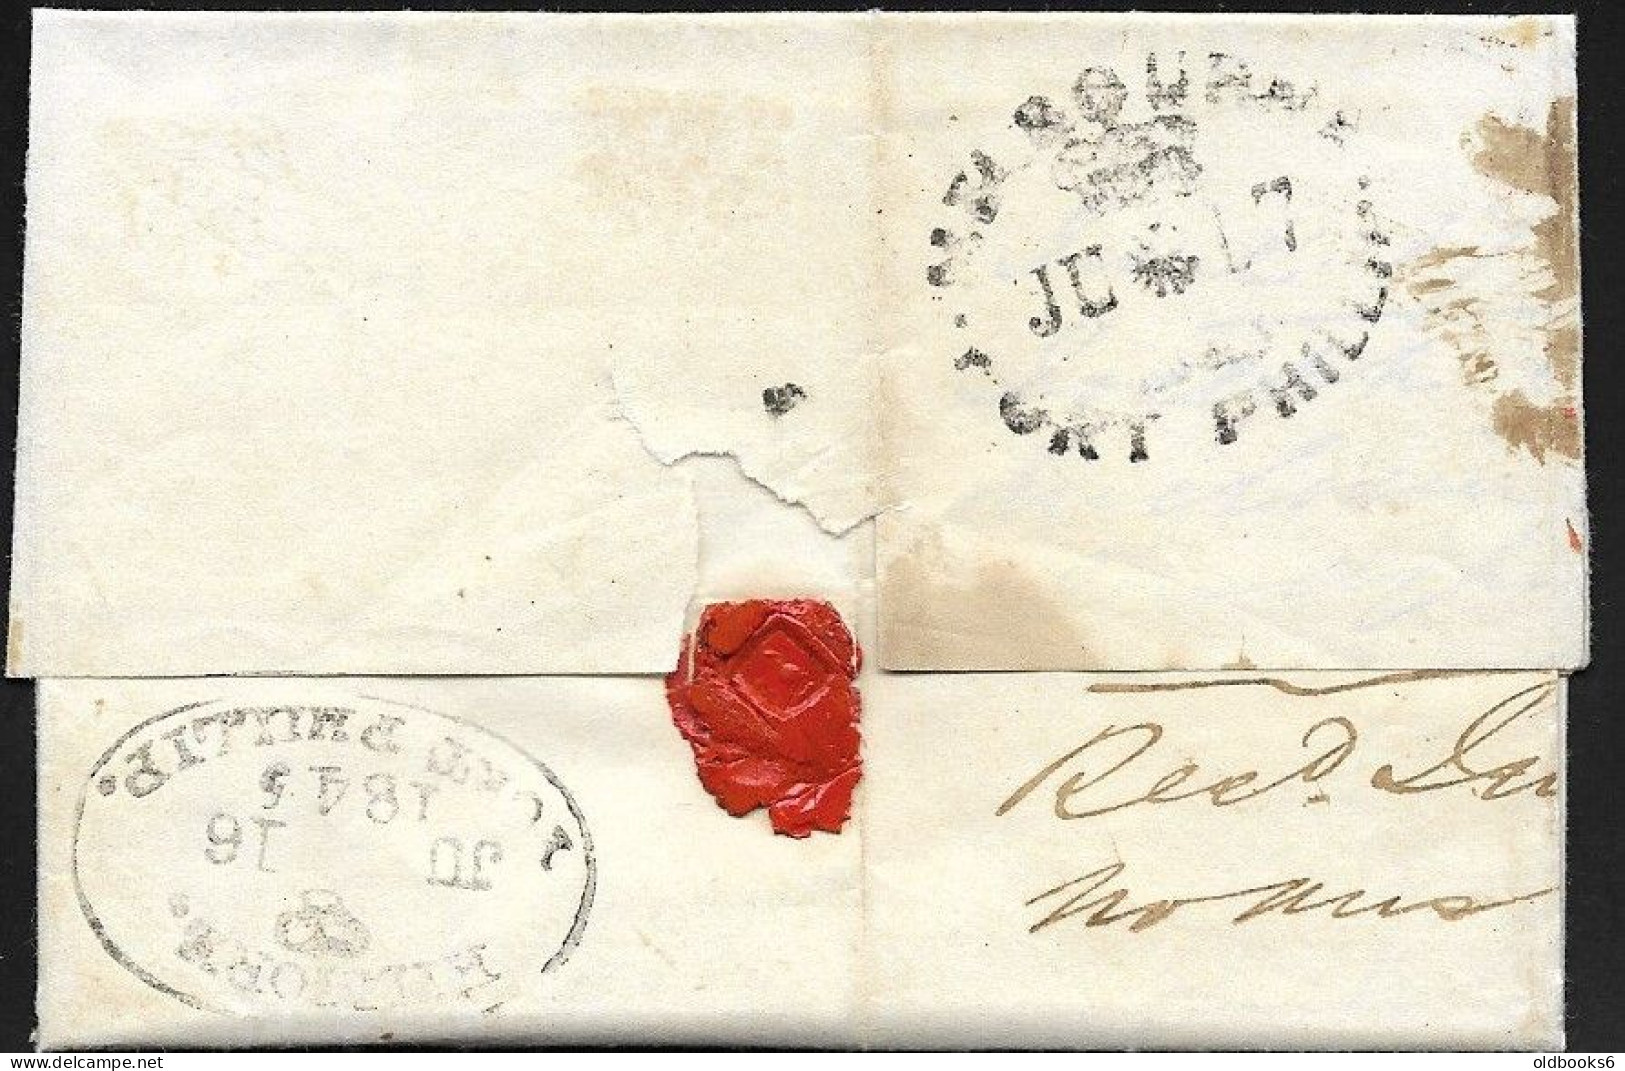 AUSTRALIA NEW SOUTH WALES 1845, PAID AT KILMORE Regist.Letter To Melbourne VF - ...-1854 Vorphilatelie